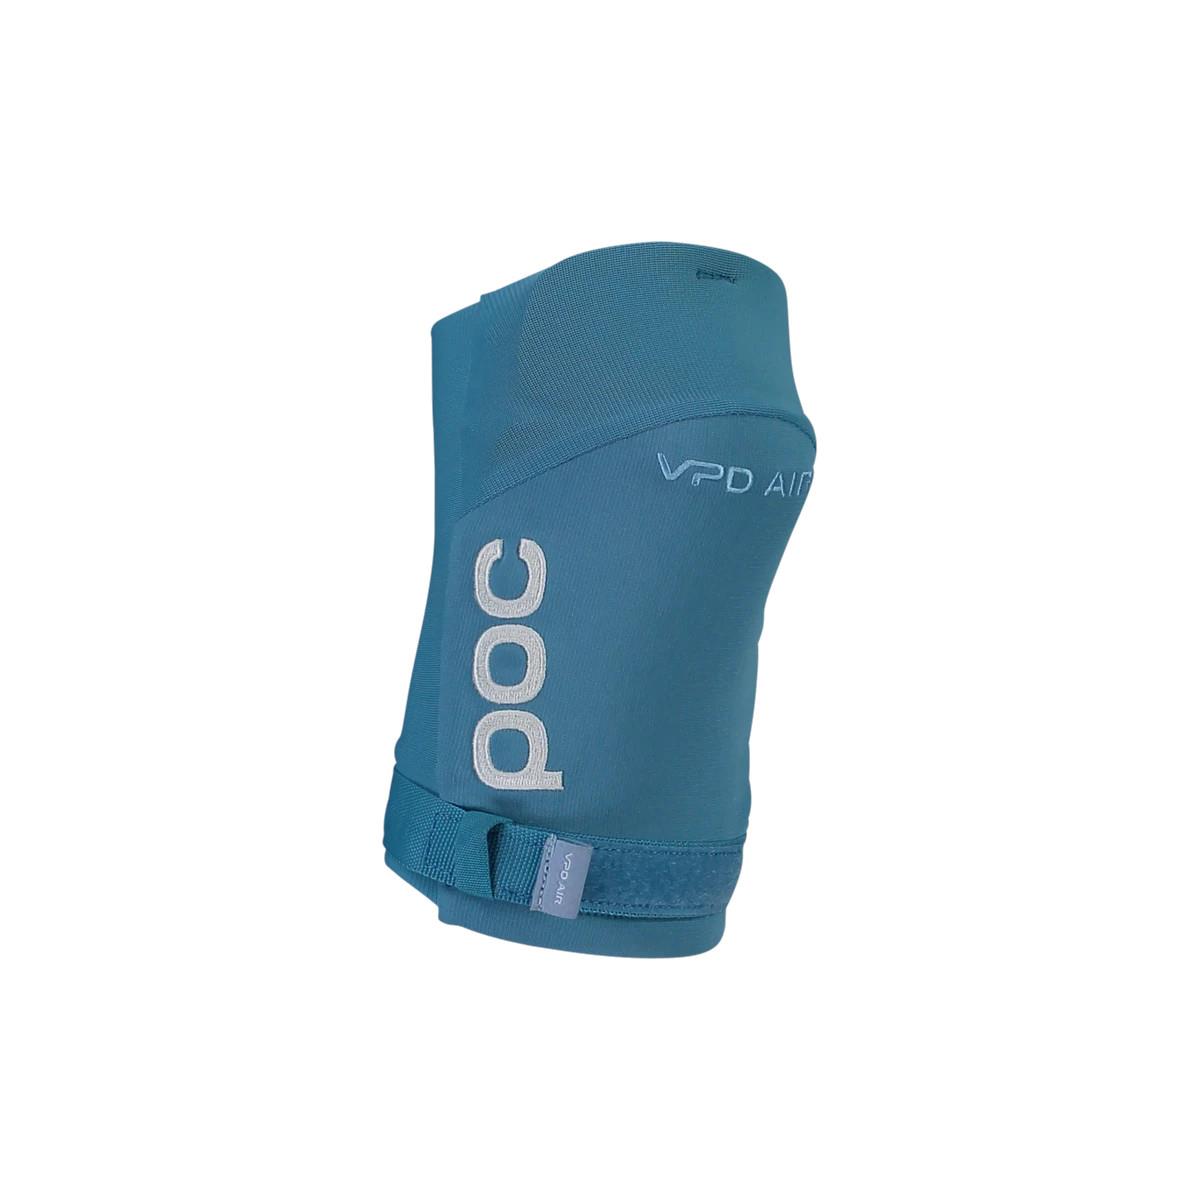 Joint VPD Air Elbow Protectors Basalt Blue Size S